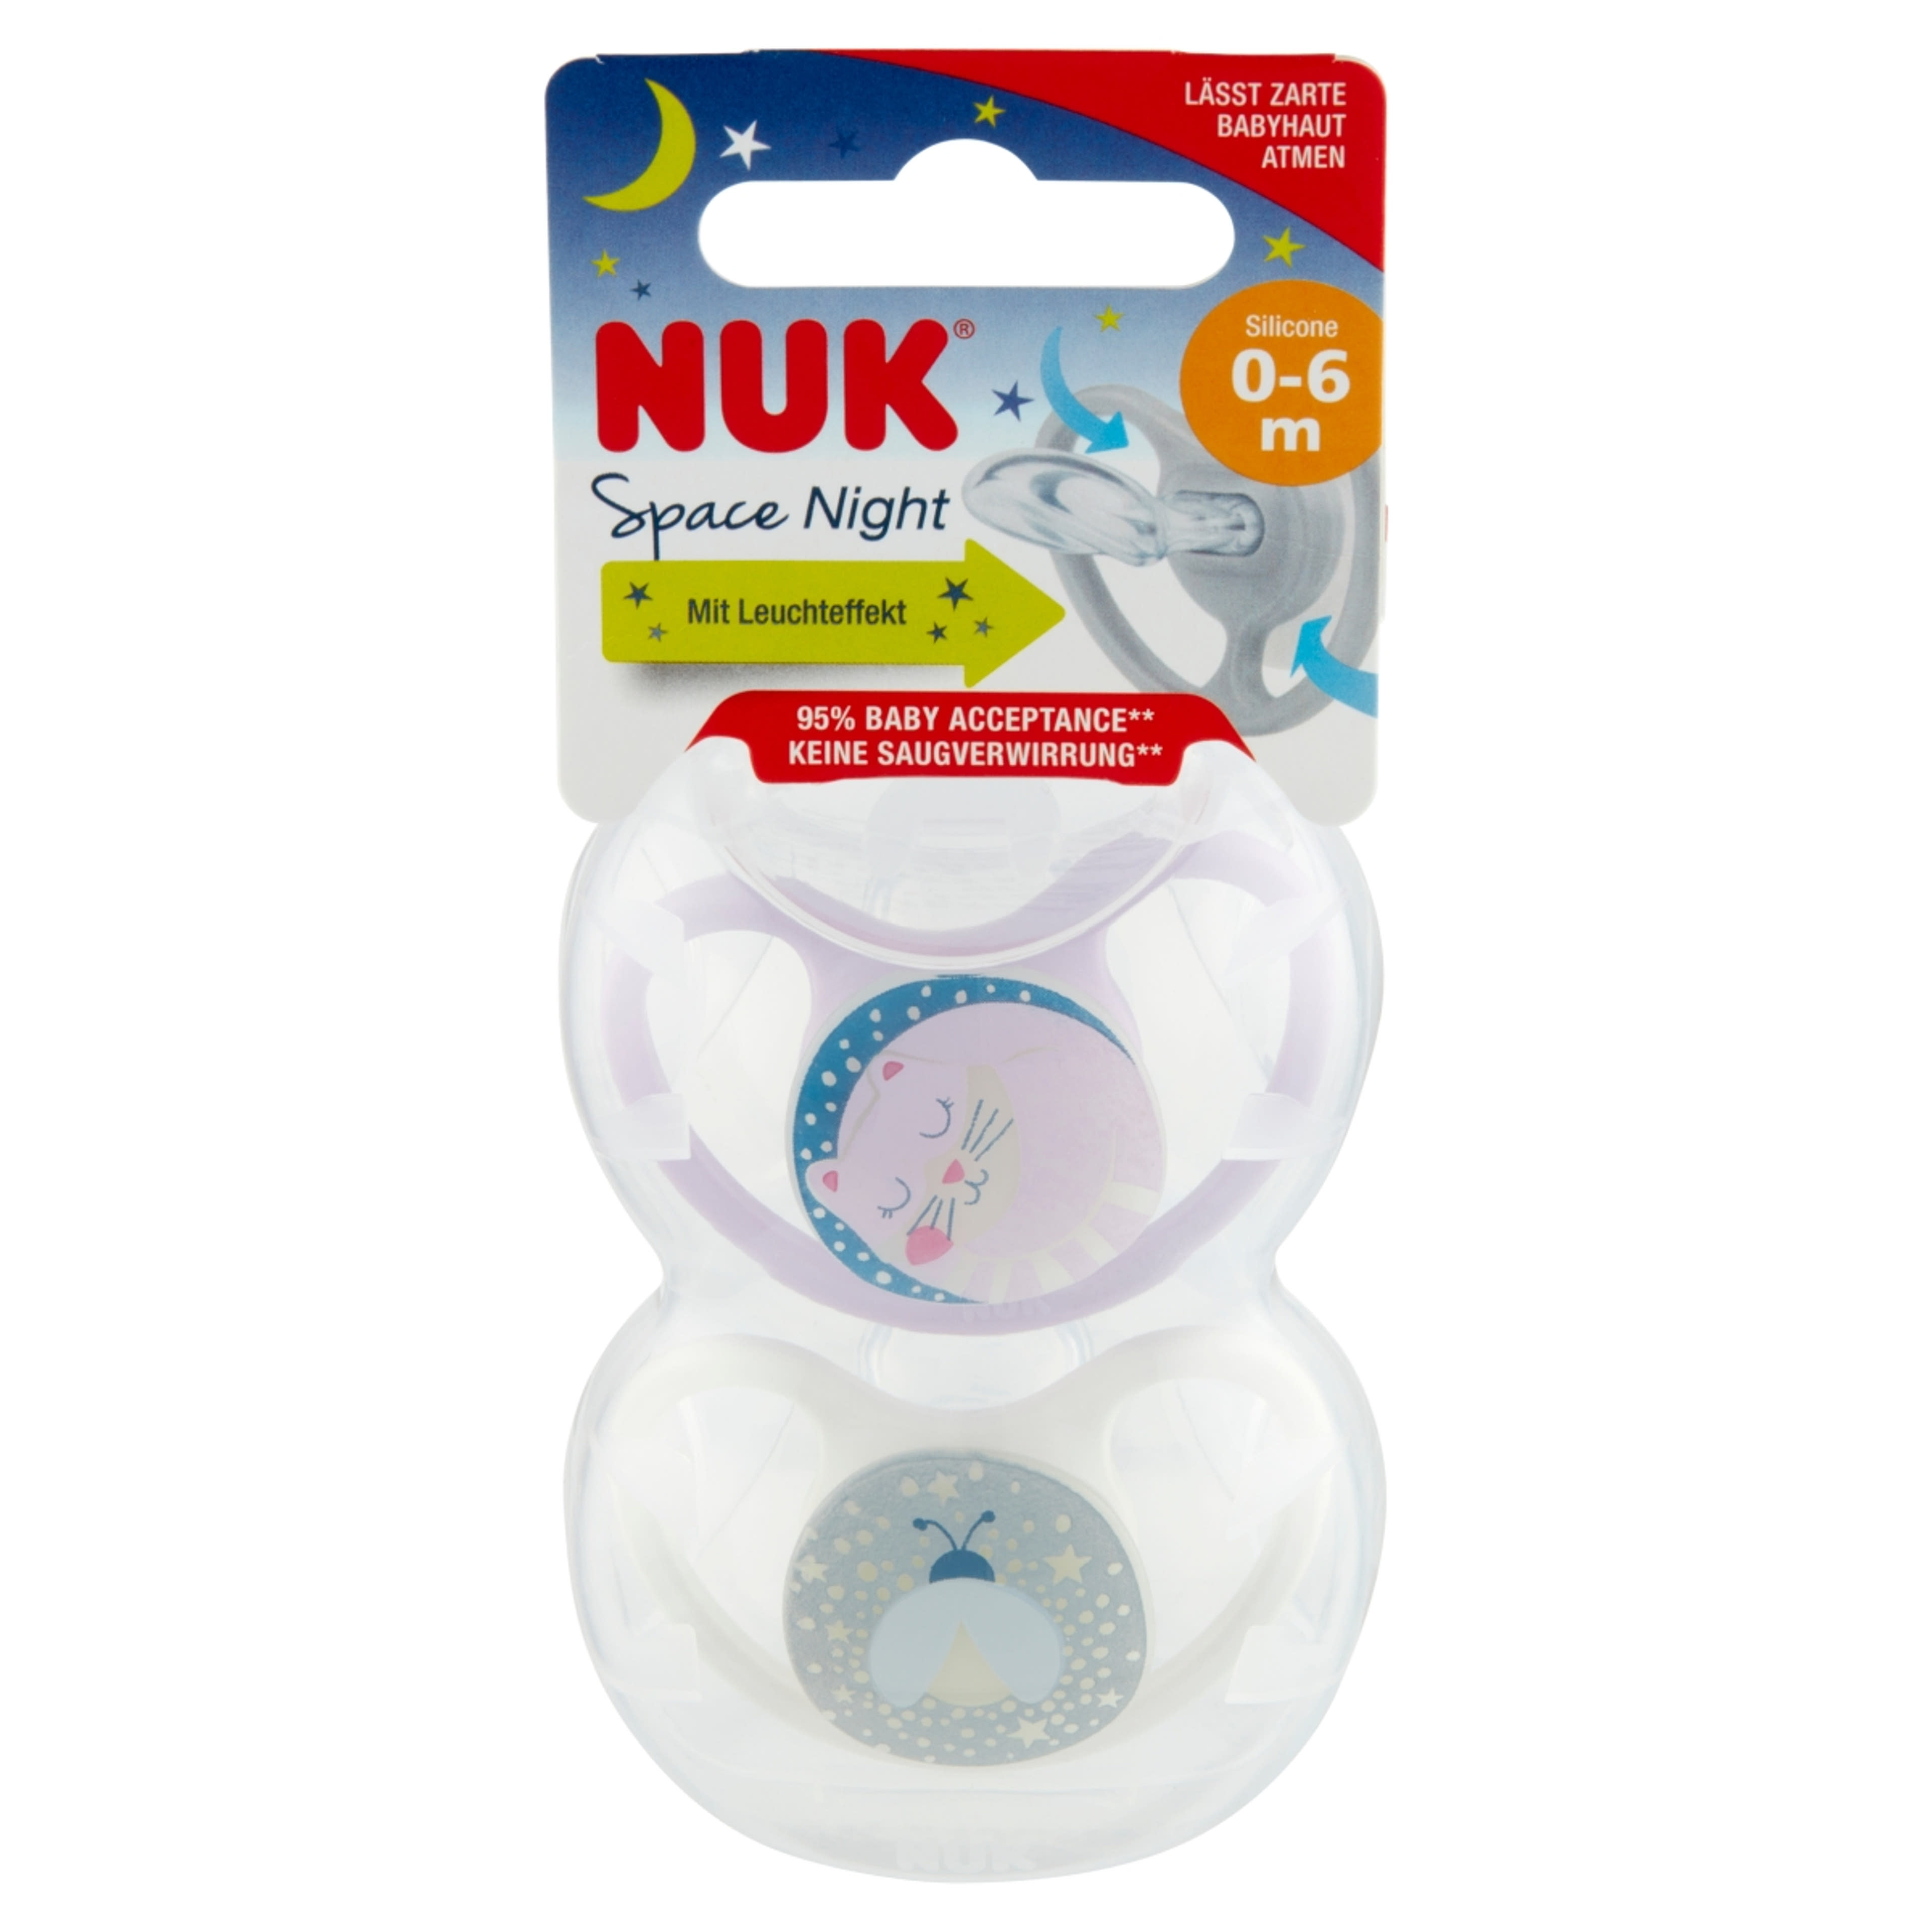 Nuk Space Night szilikon altatócumi, 0-6 hónapos korig, lány - 2 db-2